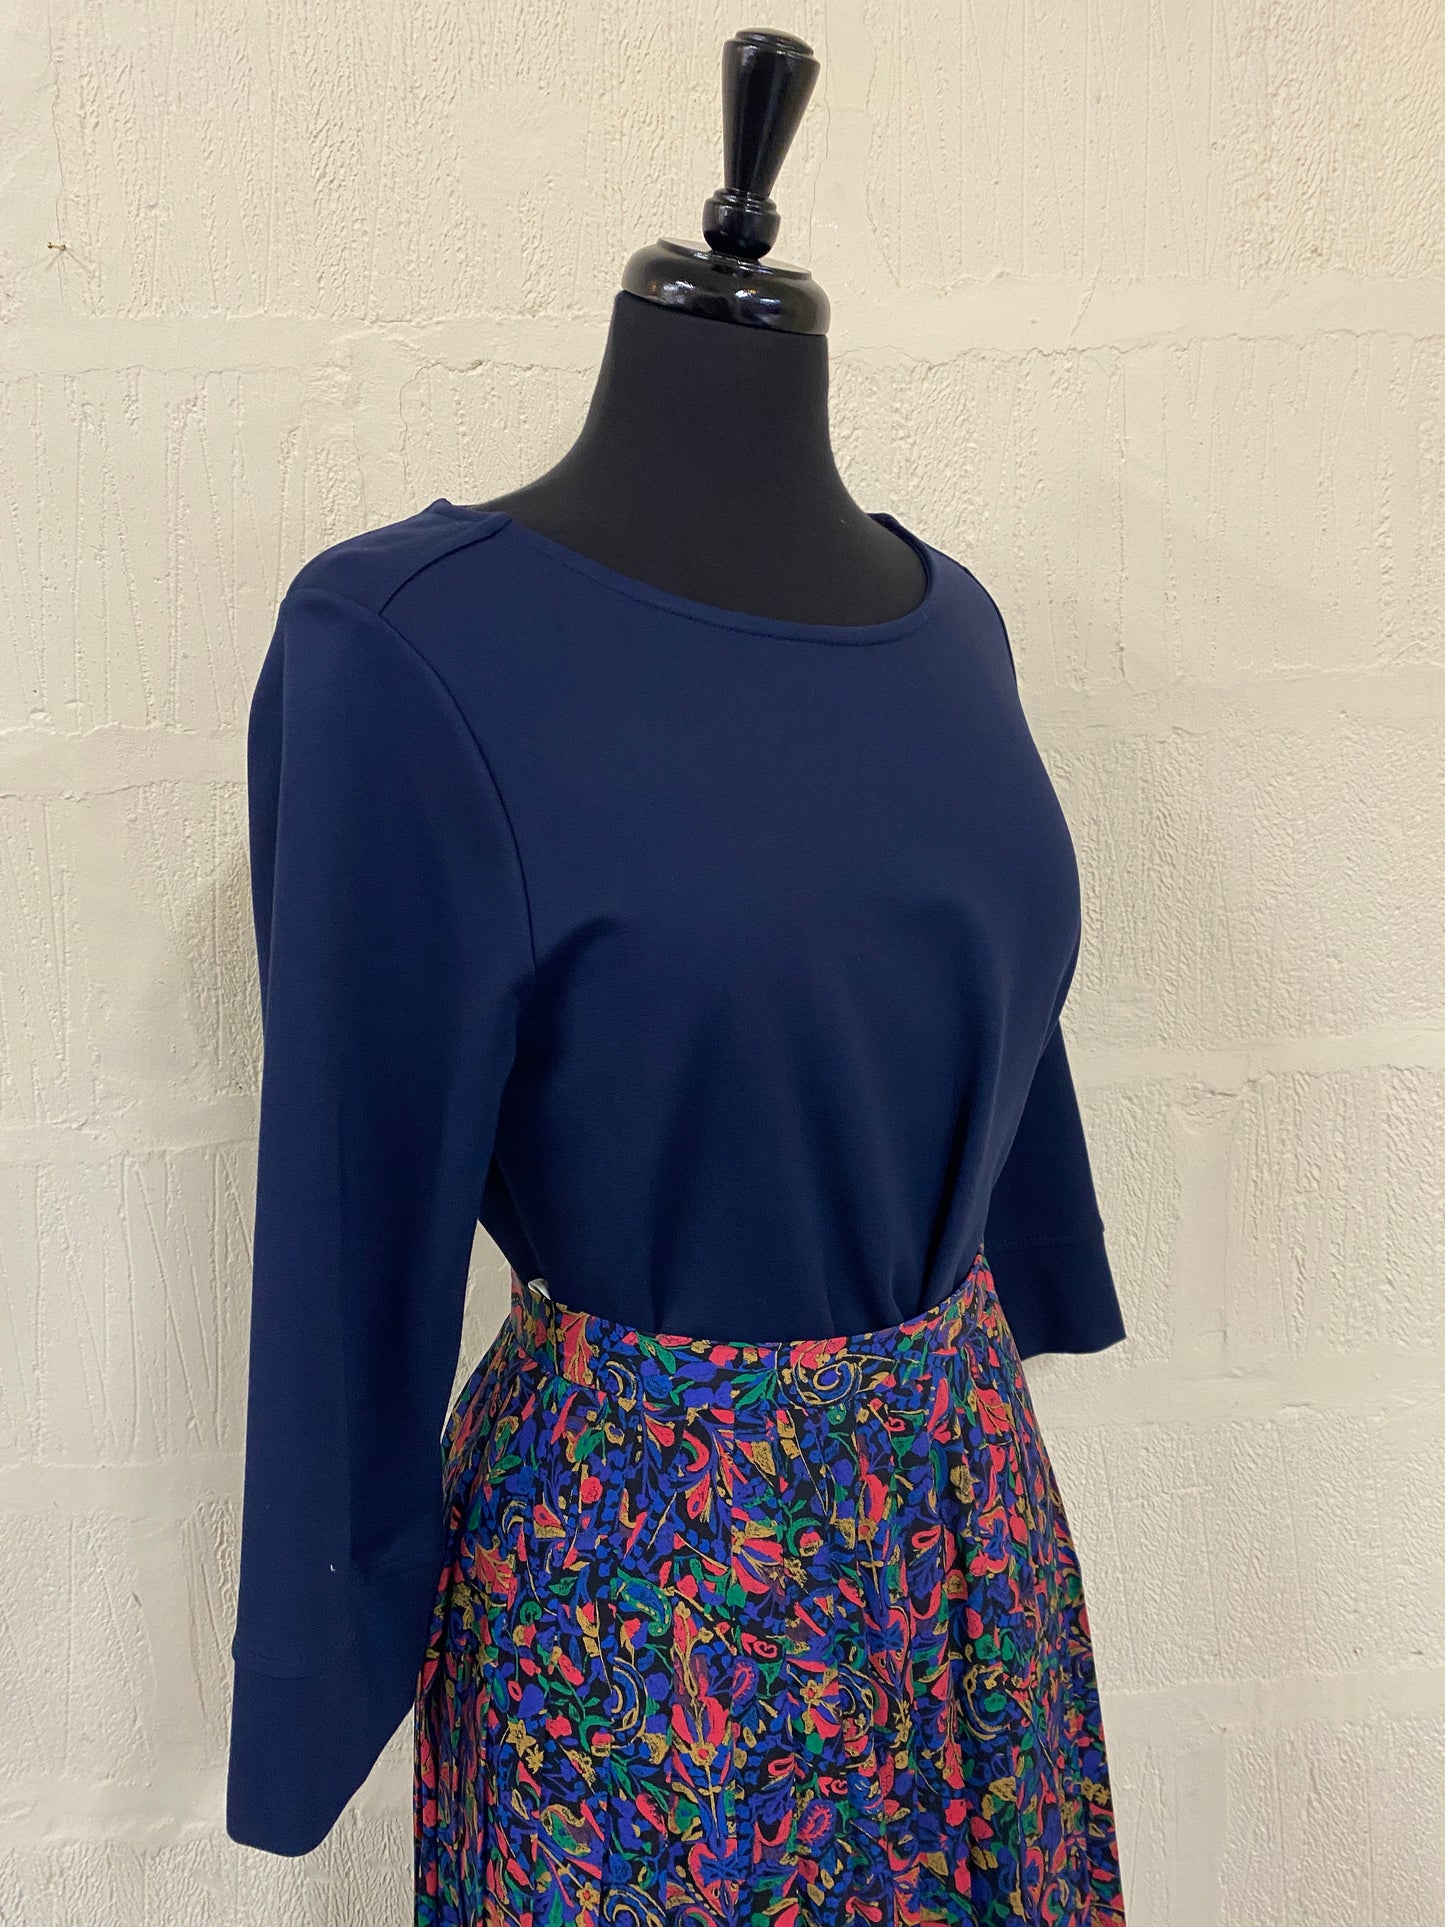 Vintage Midi Skirt Multi Colour Size 4-6